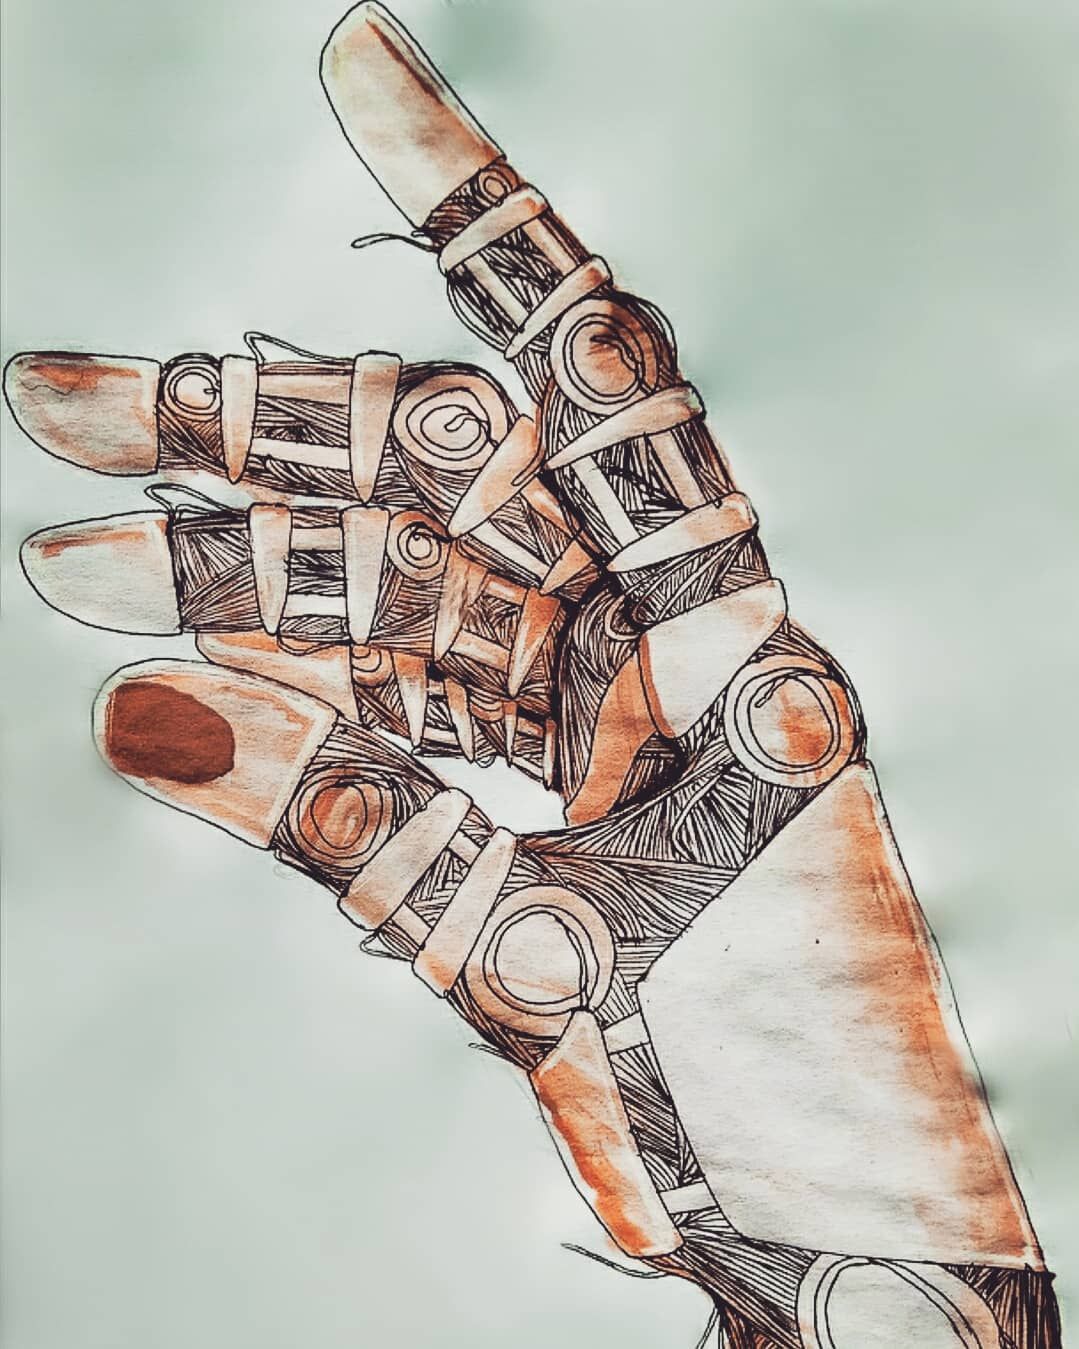 Robot Hand Sketch Robot Arms Arm Drawing Anime Robots Concept Hand